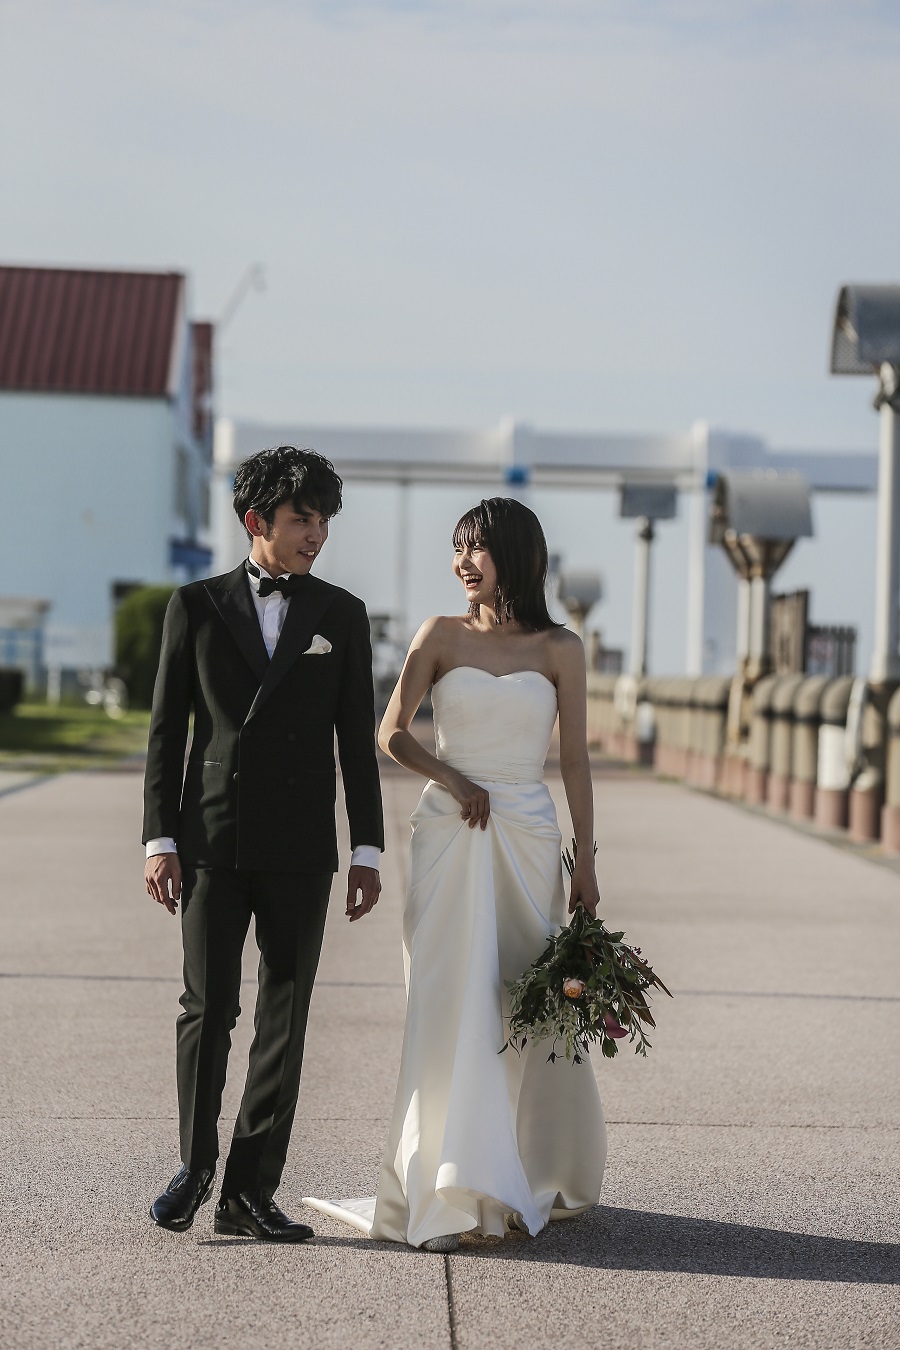 WEDDING PHOTO – THE LOVEL COSTUME